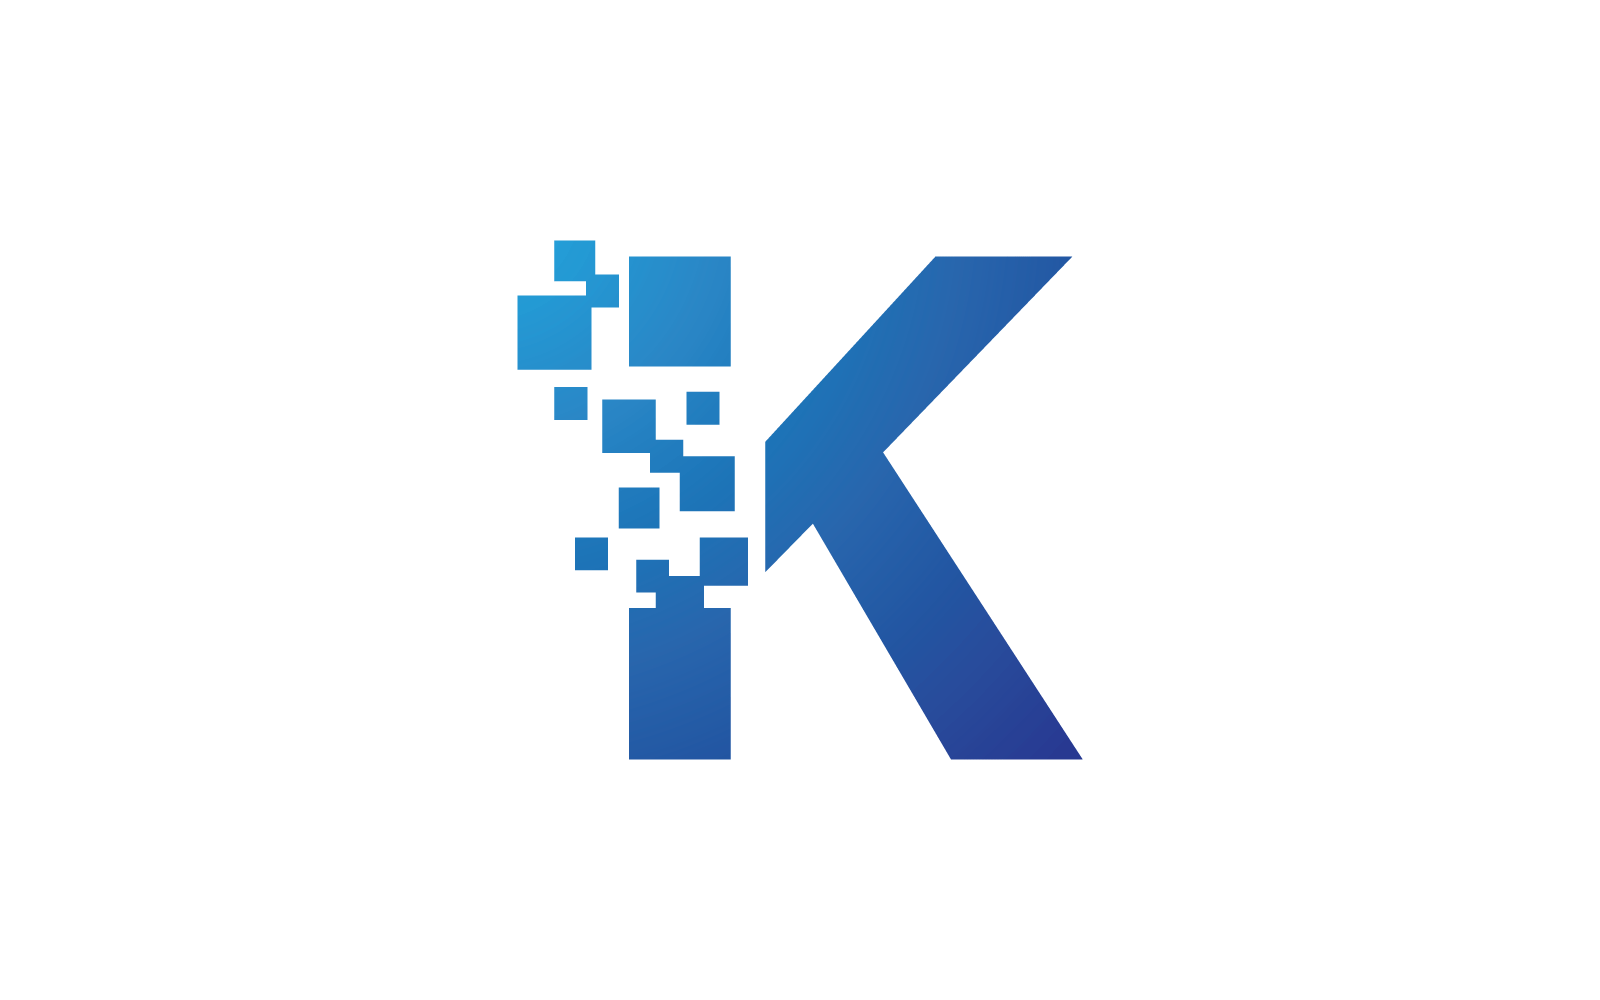 K Initial letter alphabet pixel style logo vector design